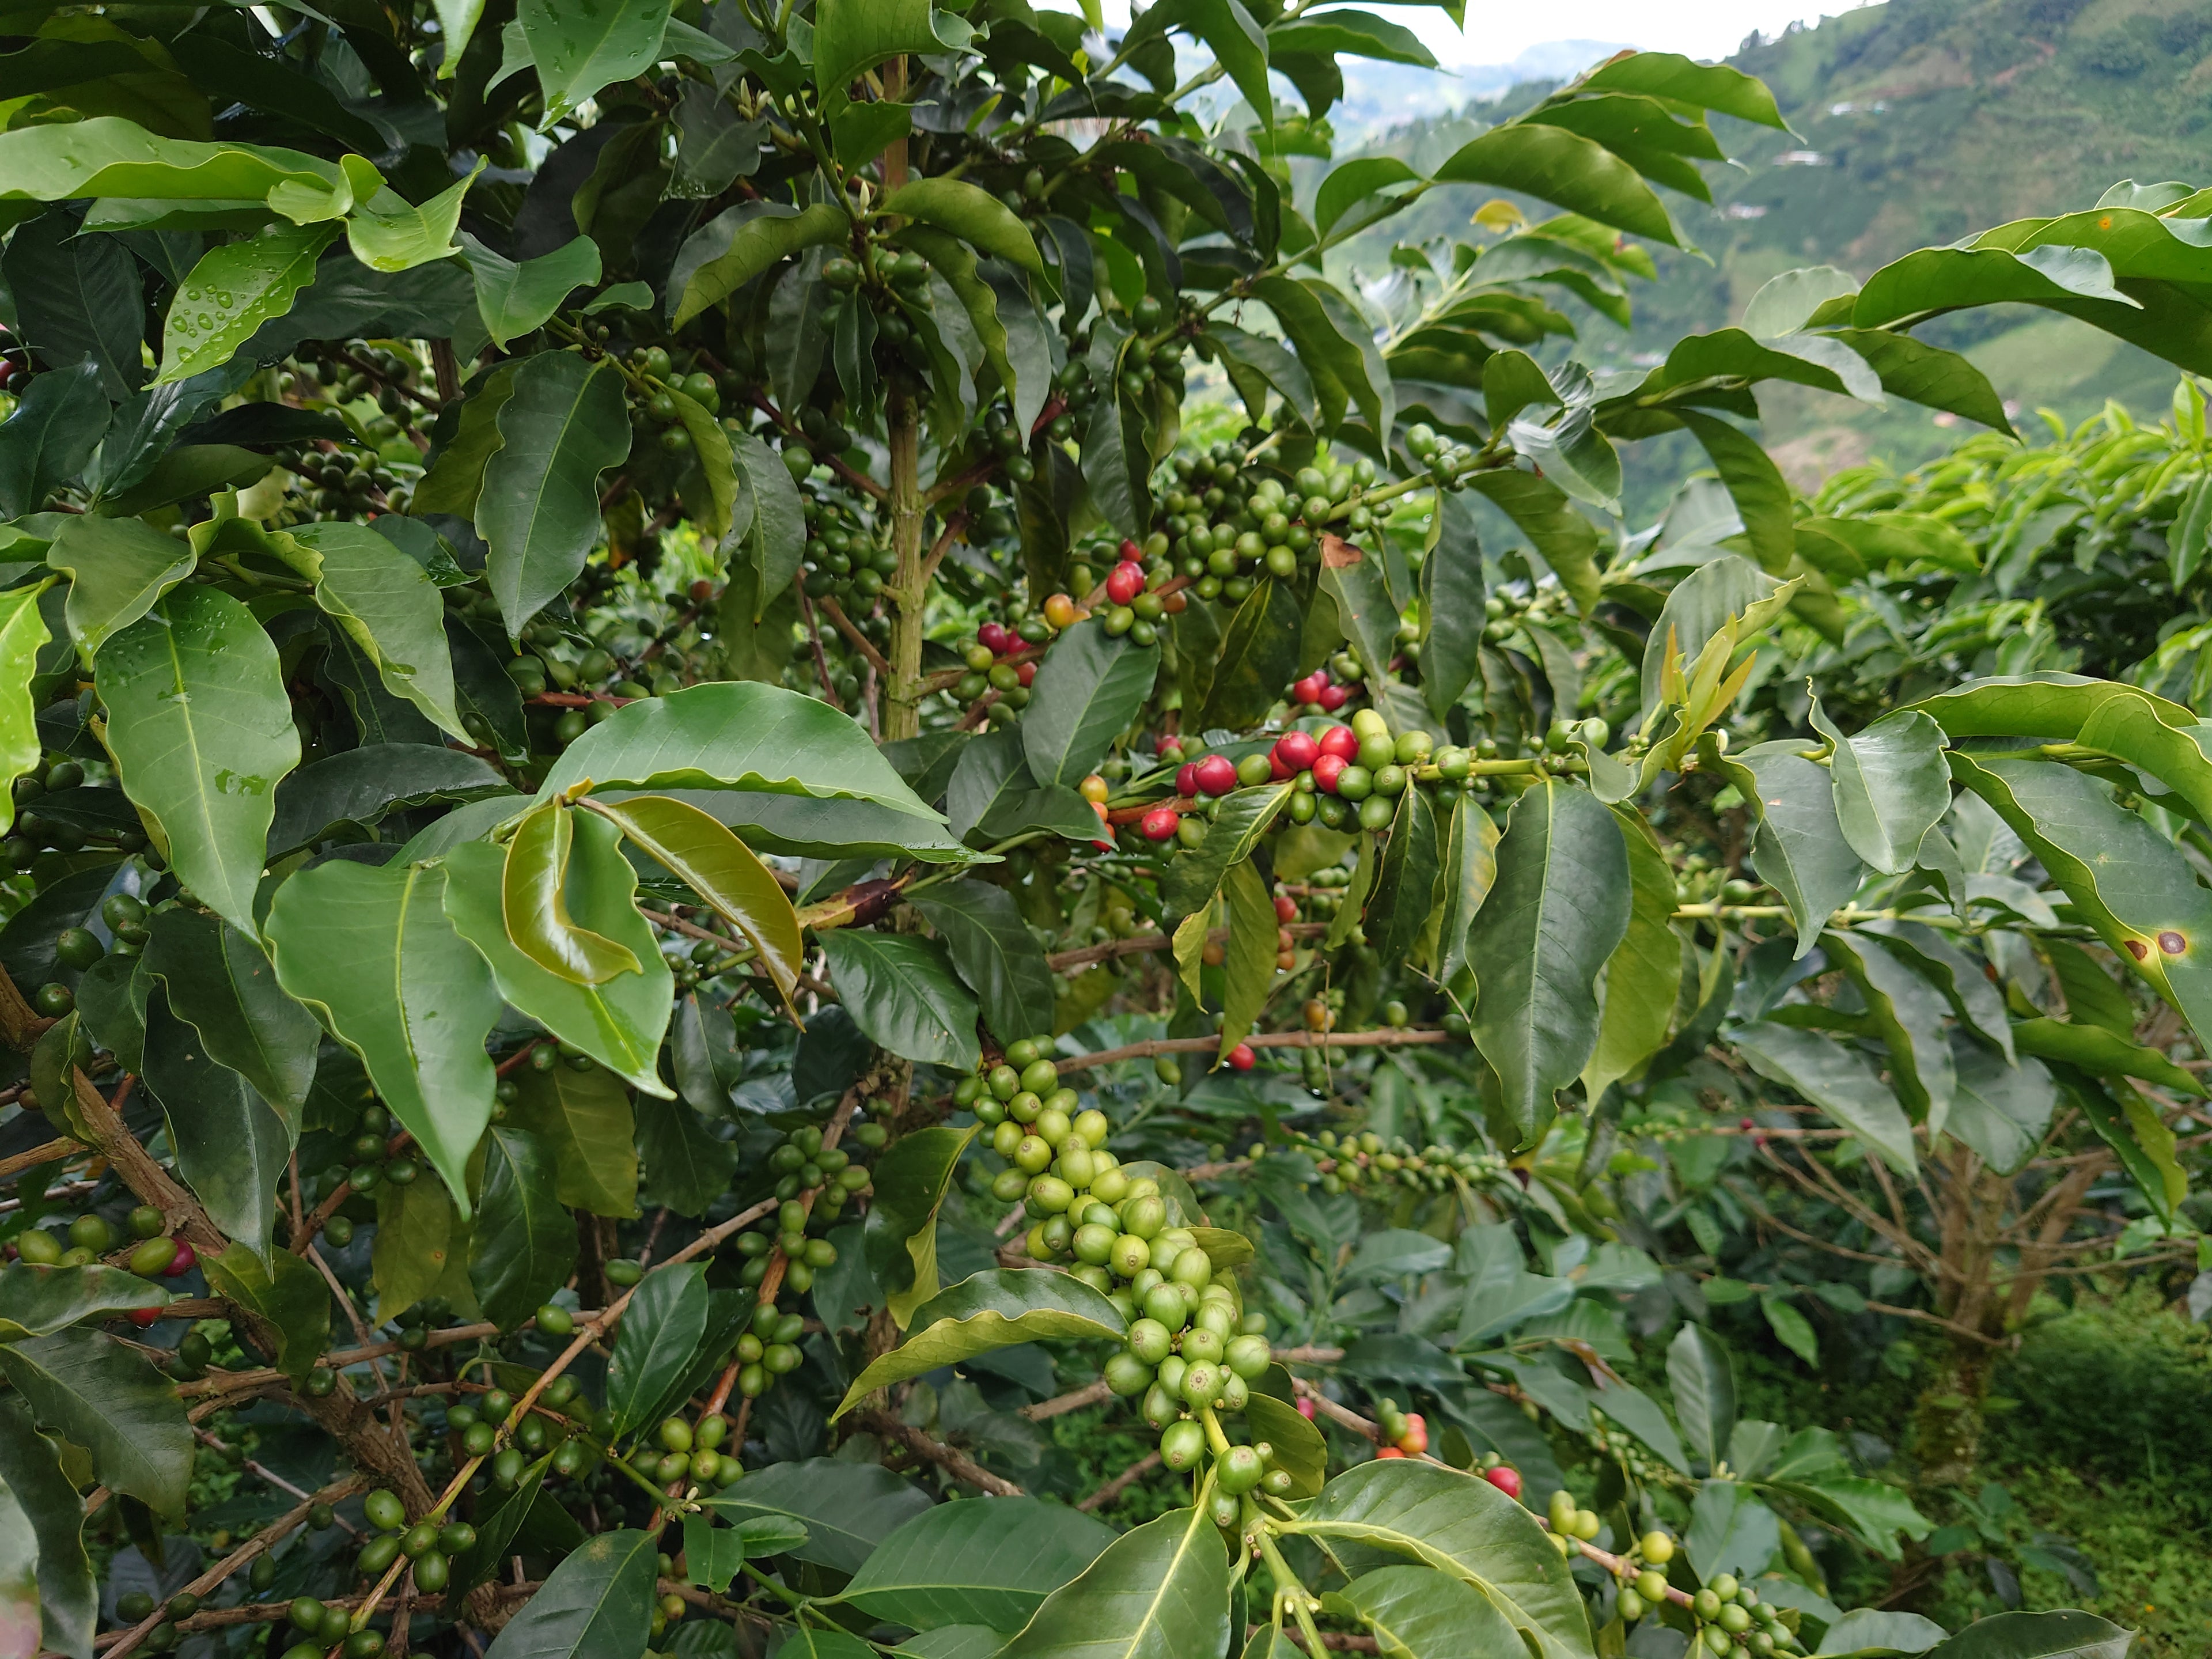 Coffee cherries at Finca La Divisa in Apia Risaralda, Colombia